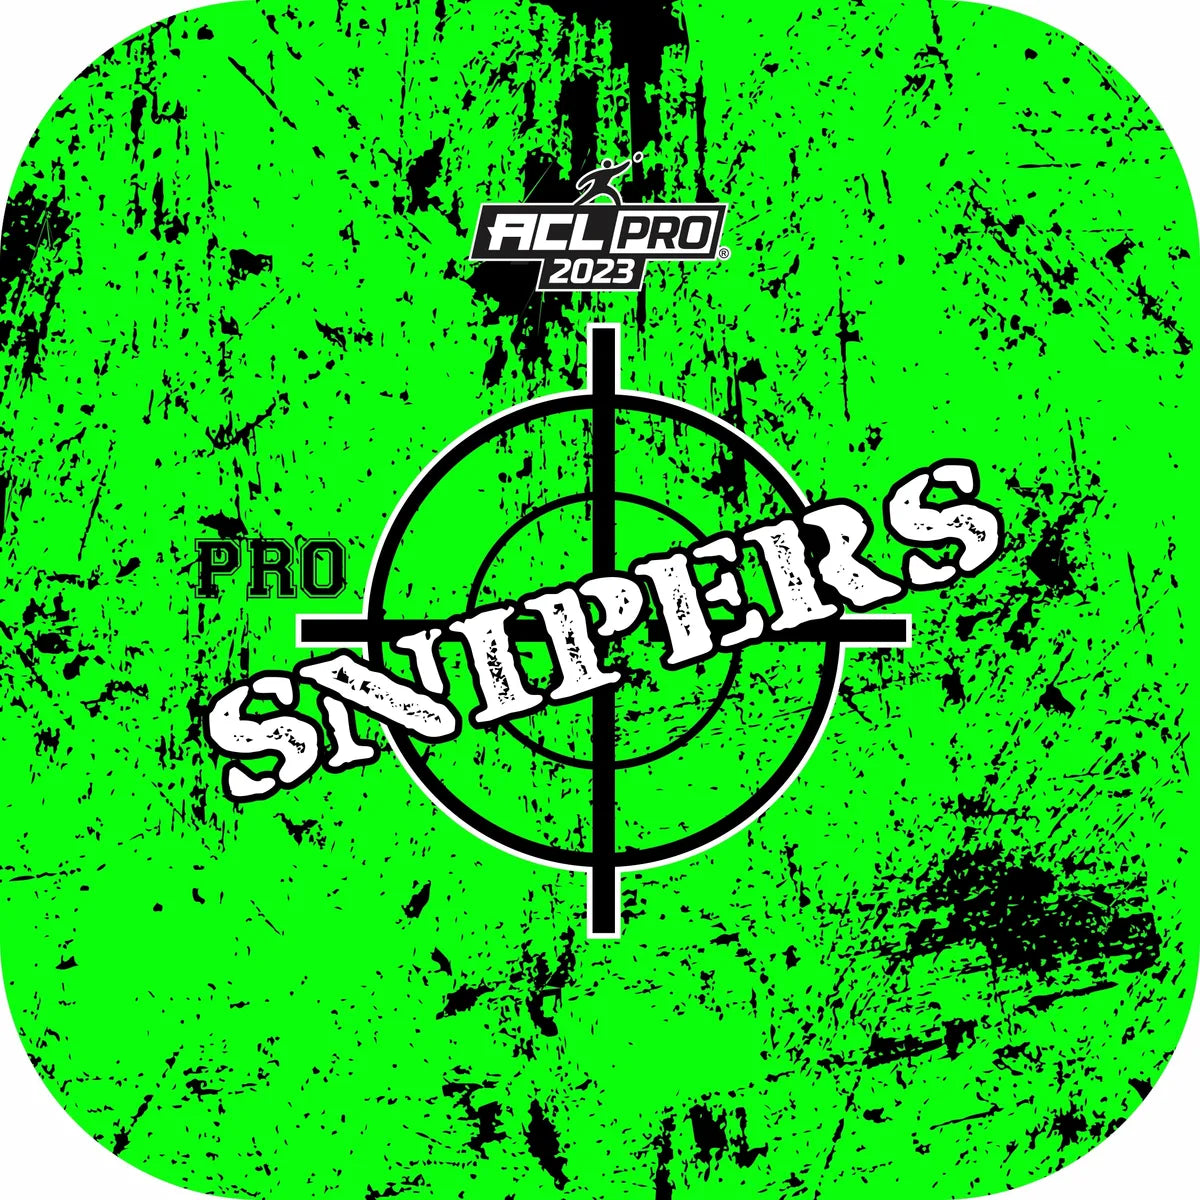 Lucky Bags Cornhole Pro Sniper - Scratch Series